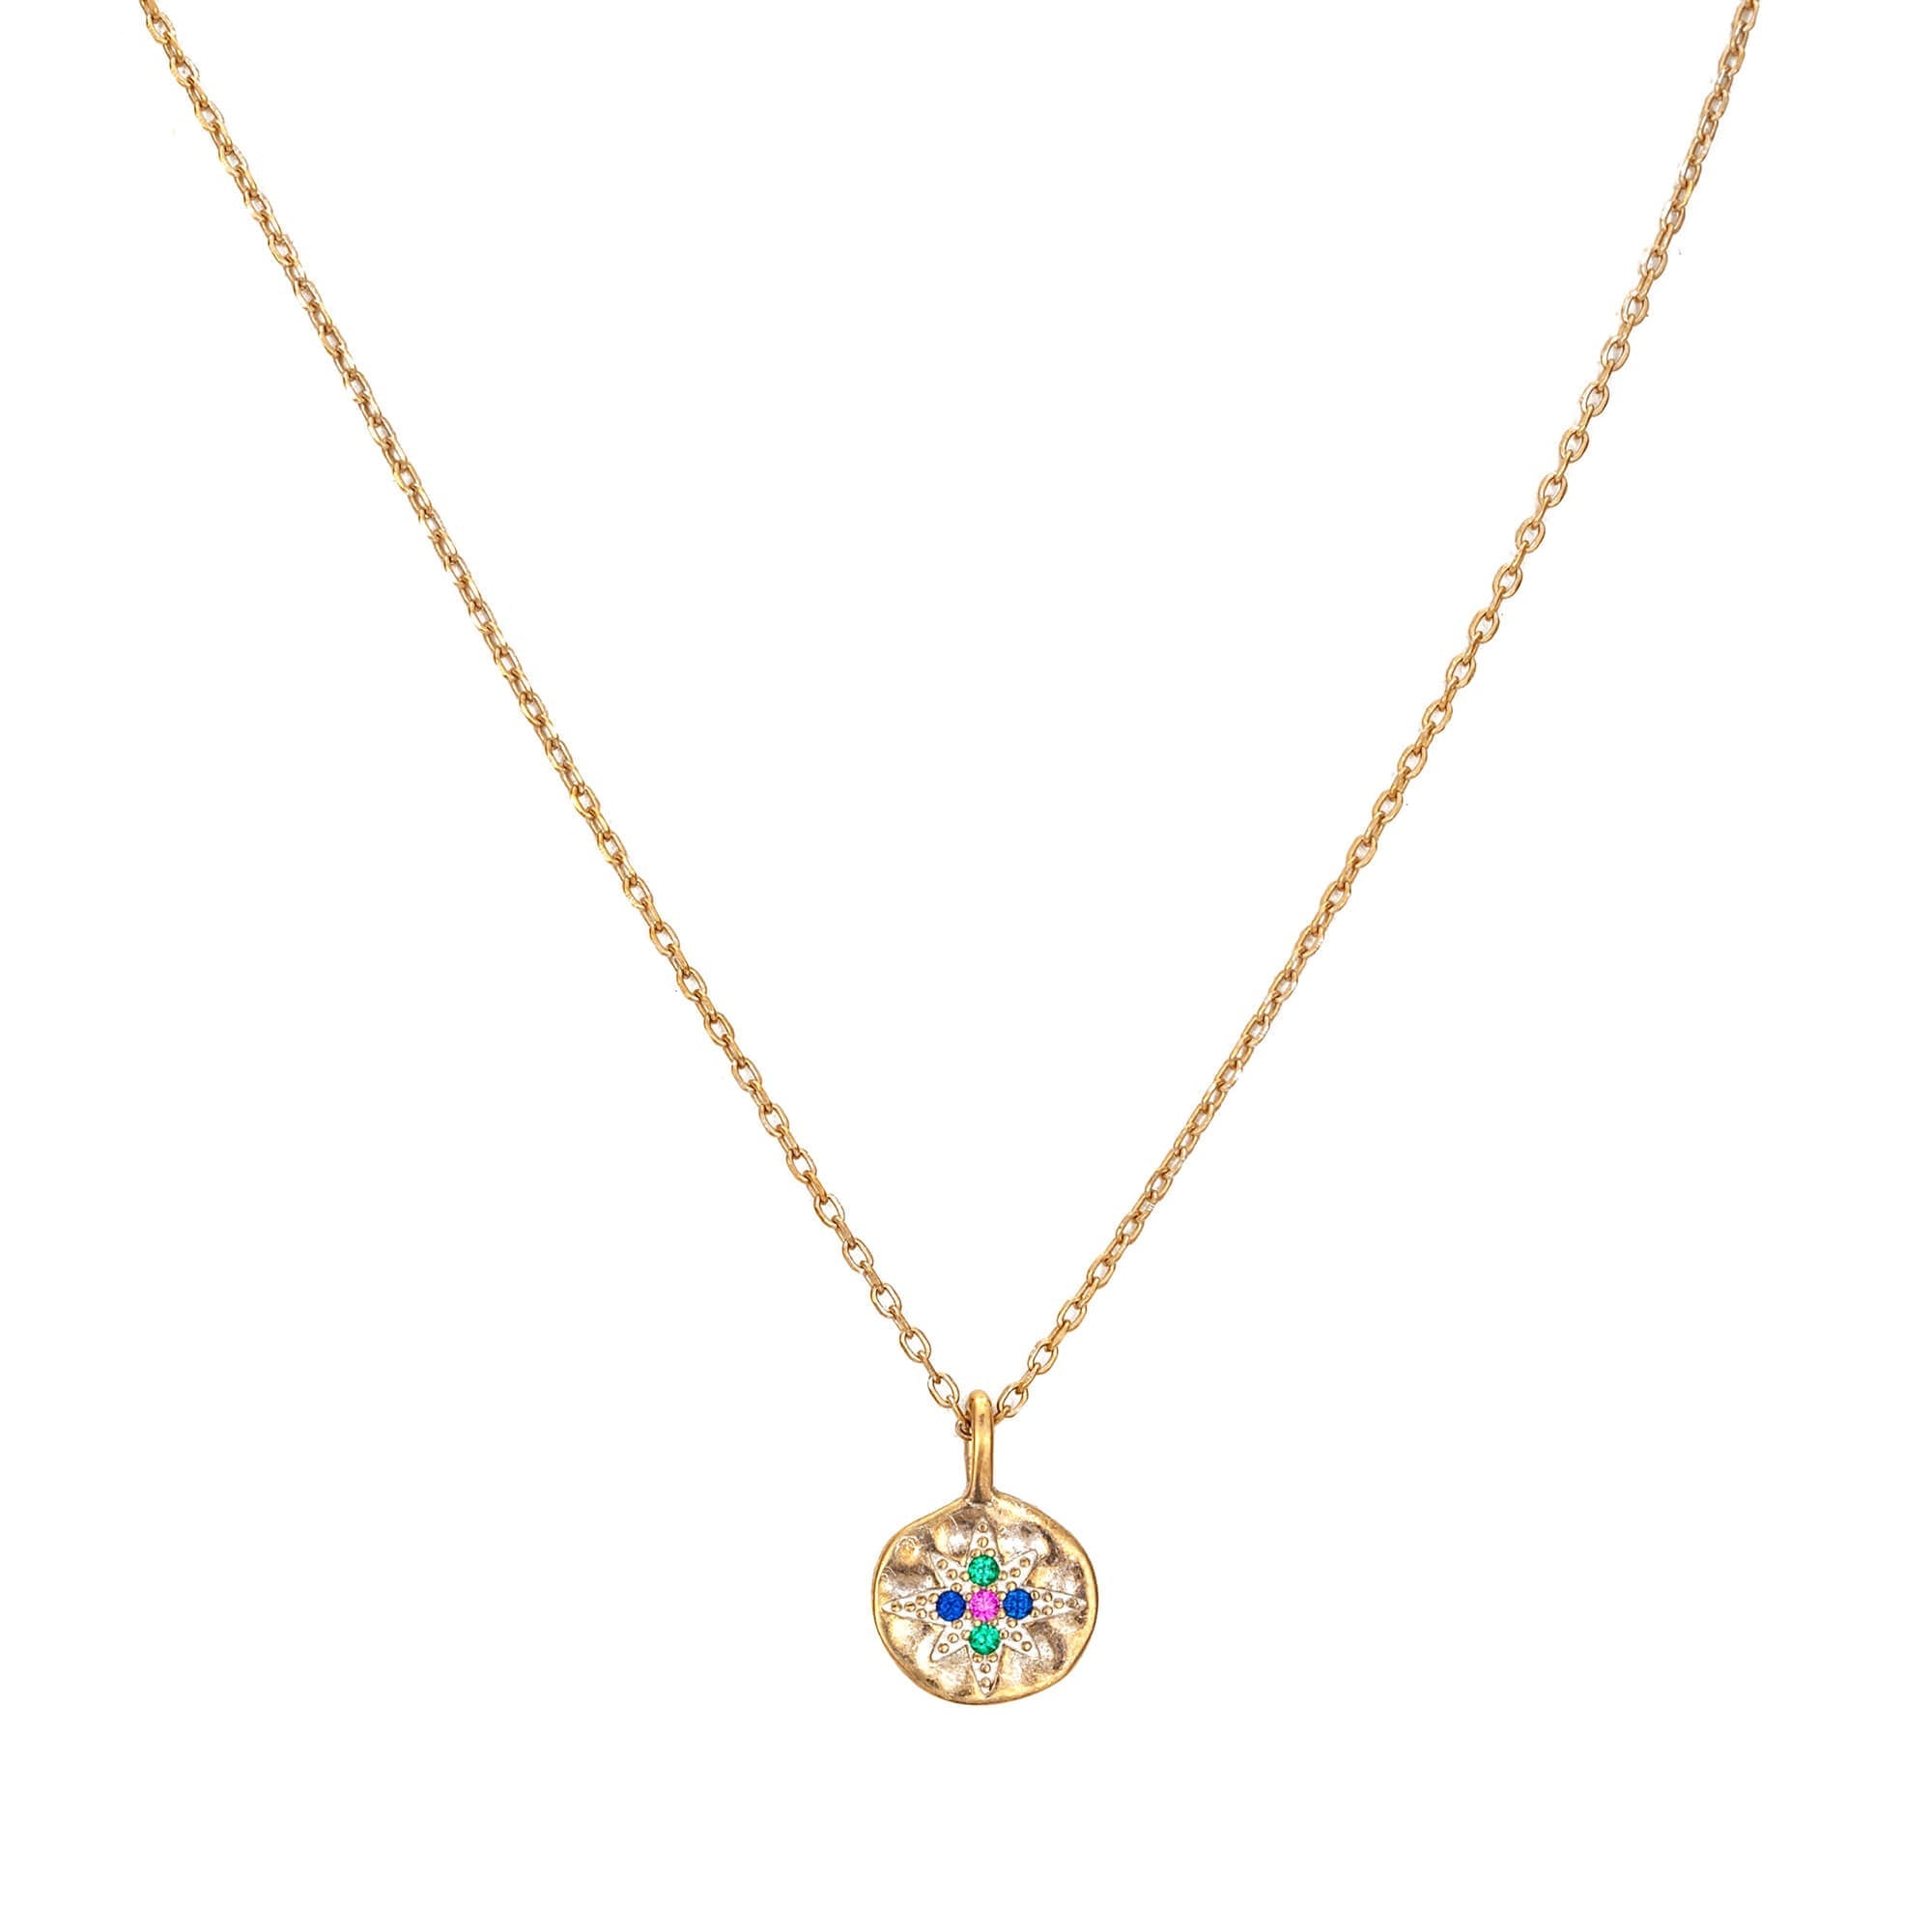 CZ Star necklace - seol gold